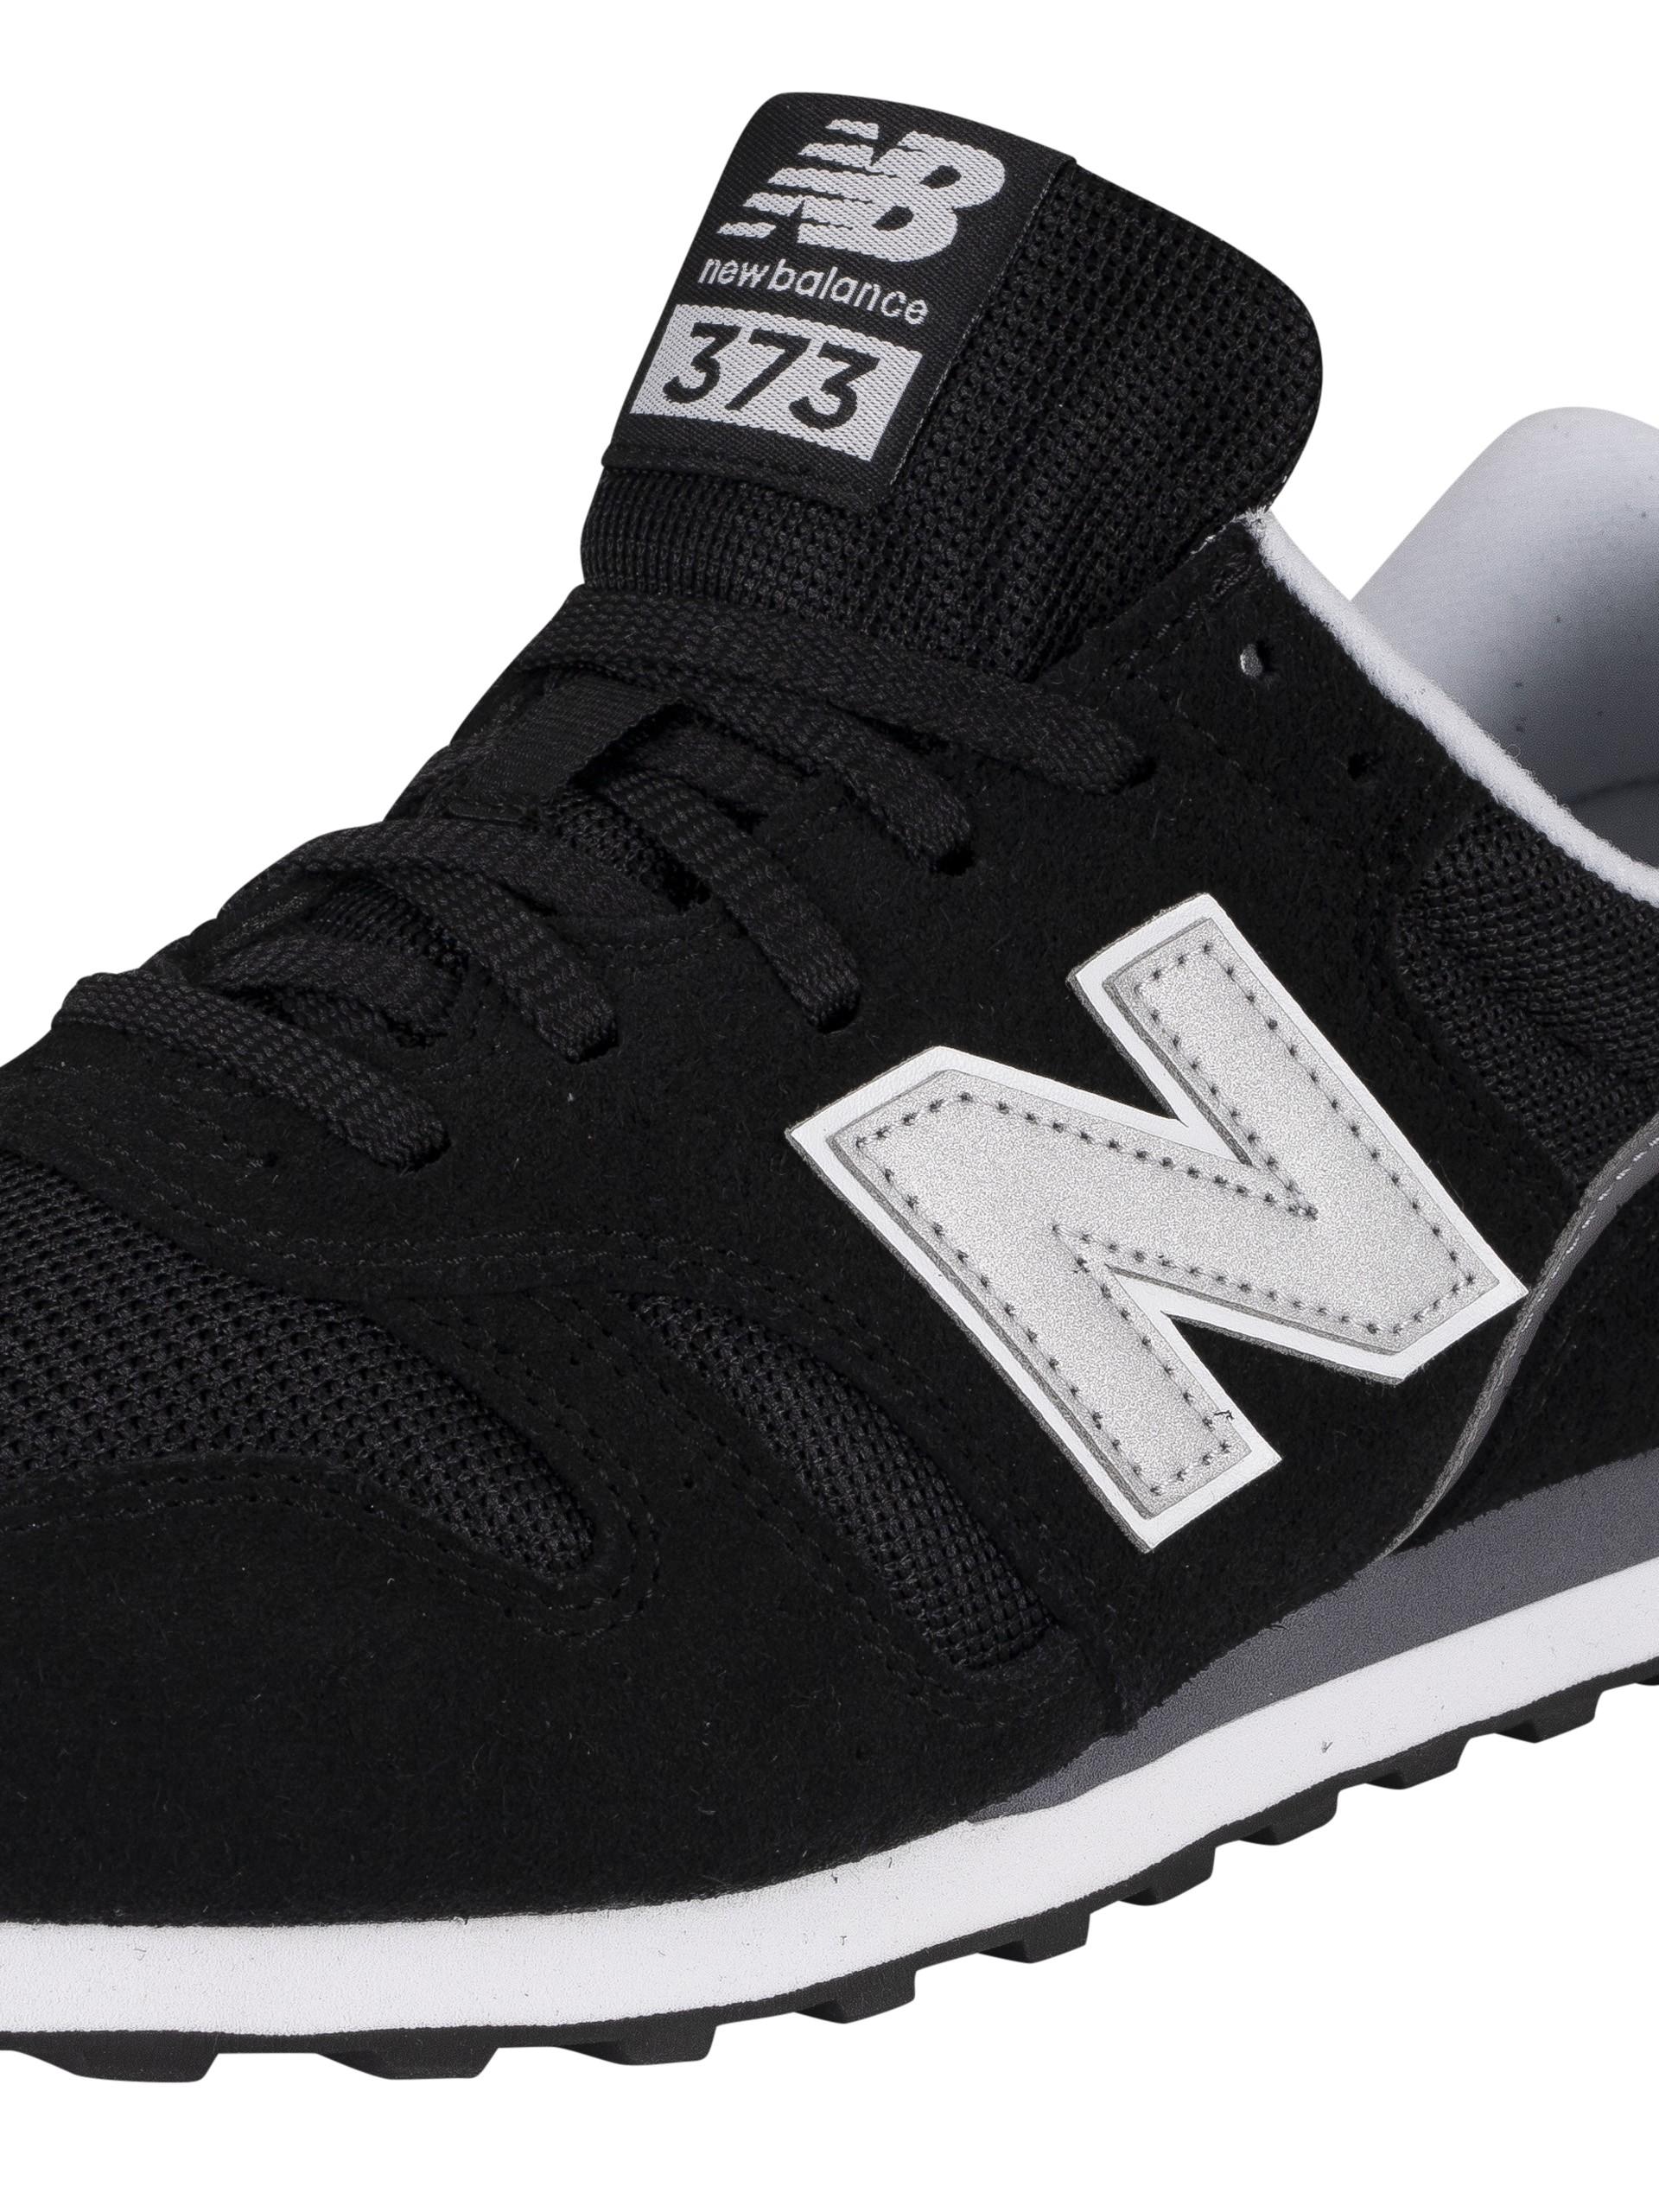 new balance 373 trainers black